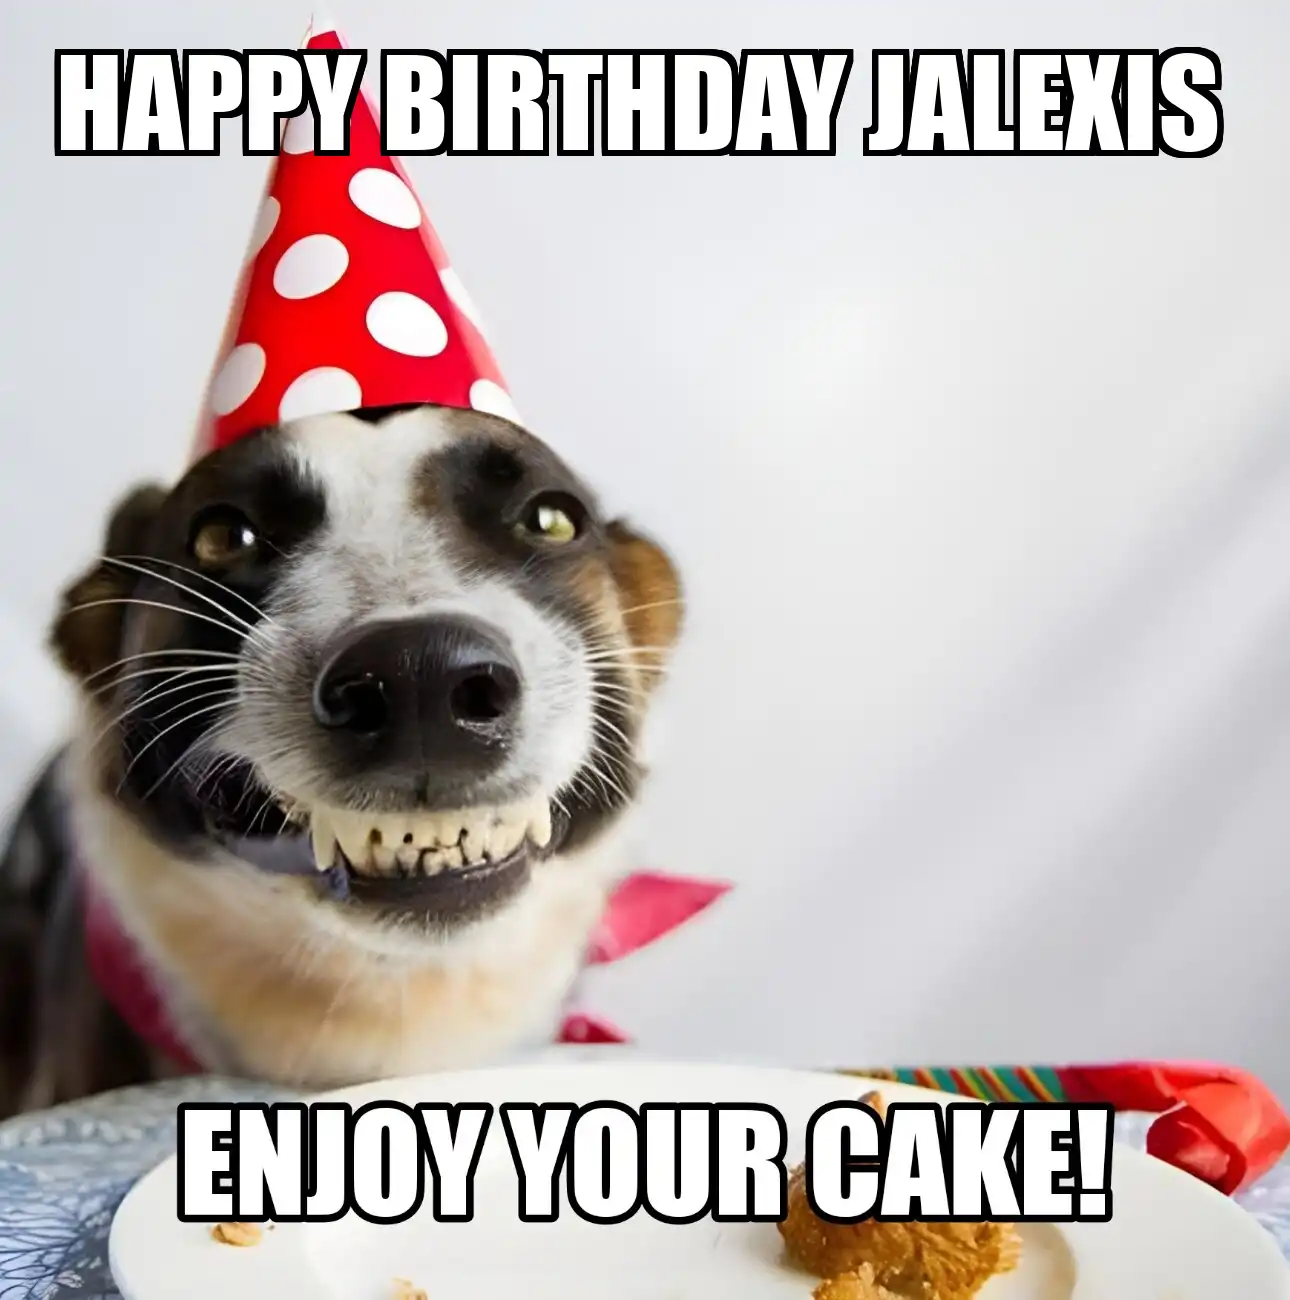 Happy Birthday Jalexis Enjoy Your Cake Dog Meme